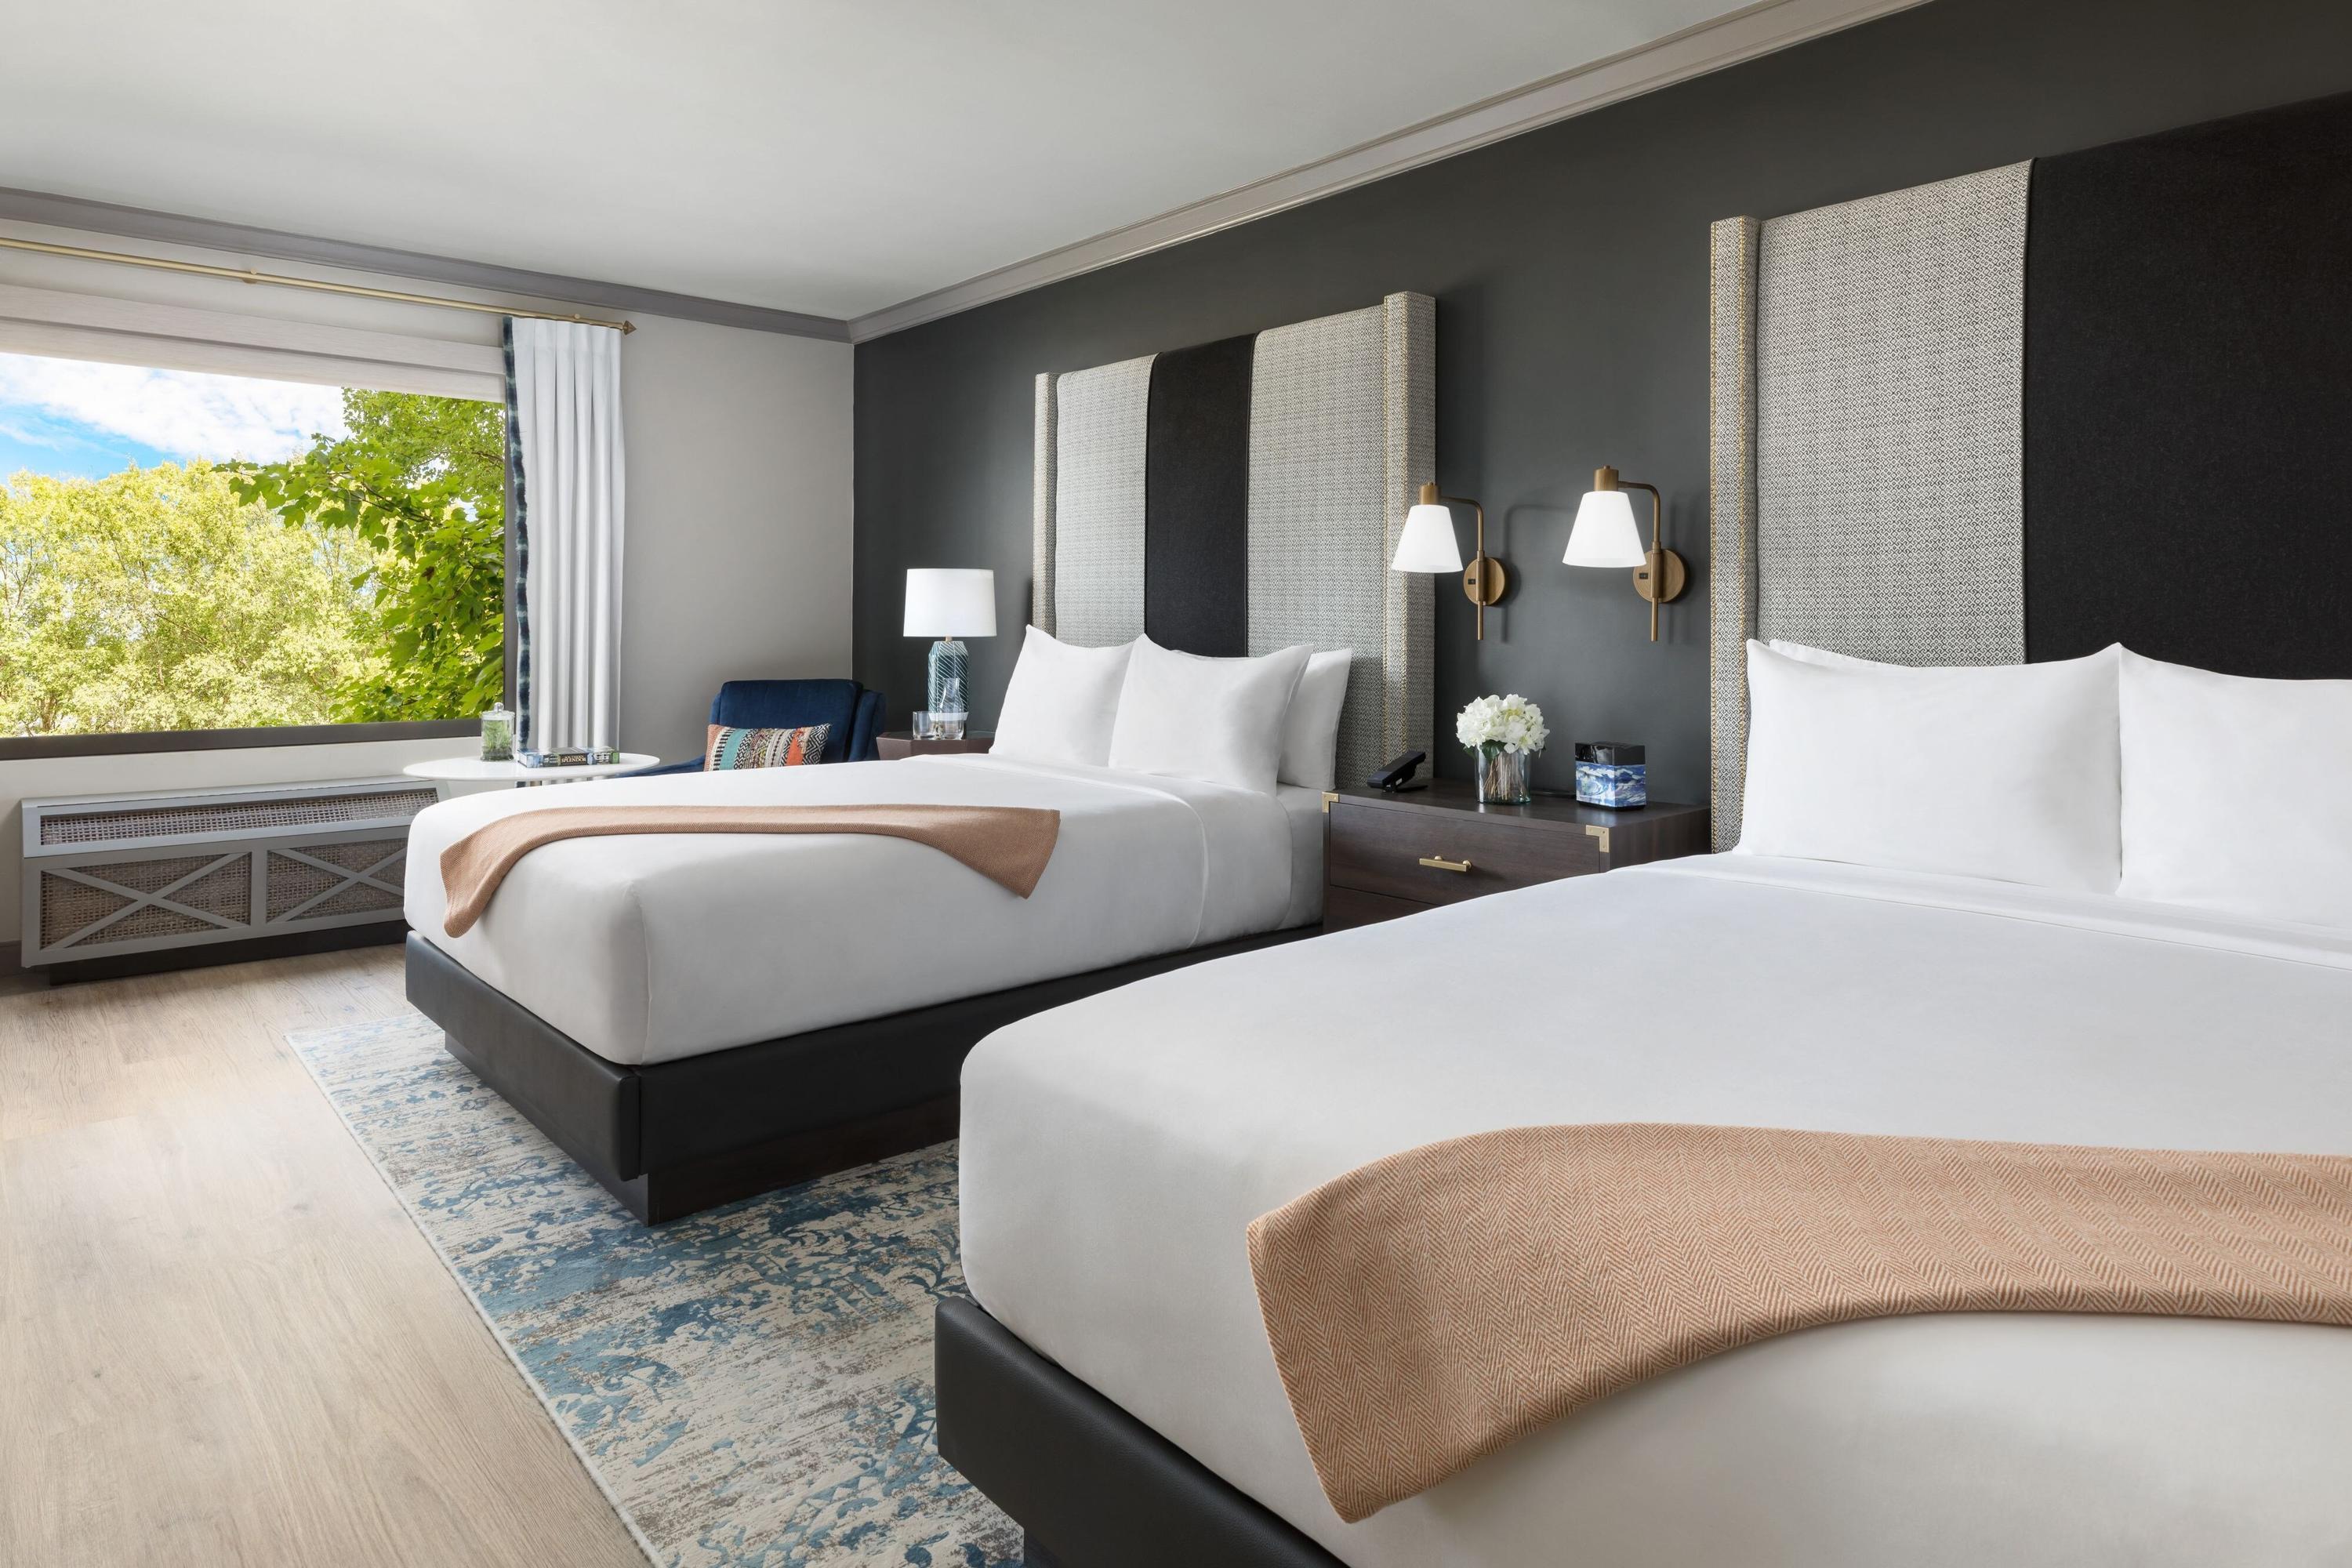 Four Seasons Hotel Atlanta | Atlanta (GA) 2020 UPDATED DEALS ₹39020, HD  Photos & Reviews